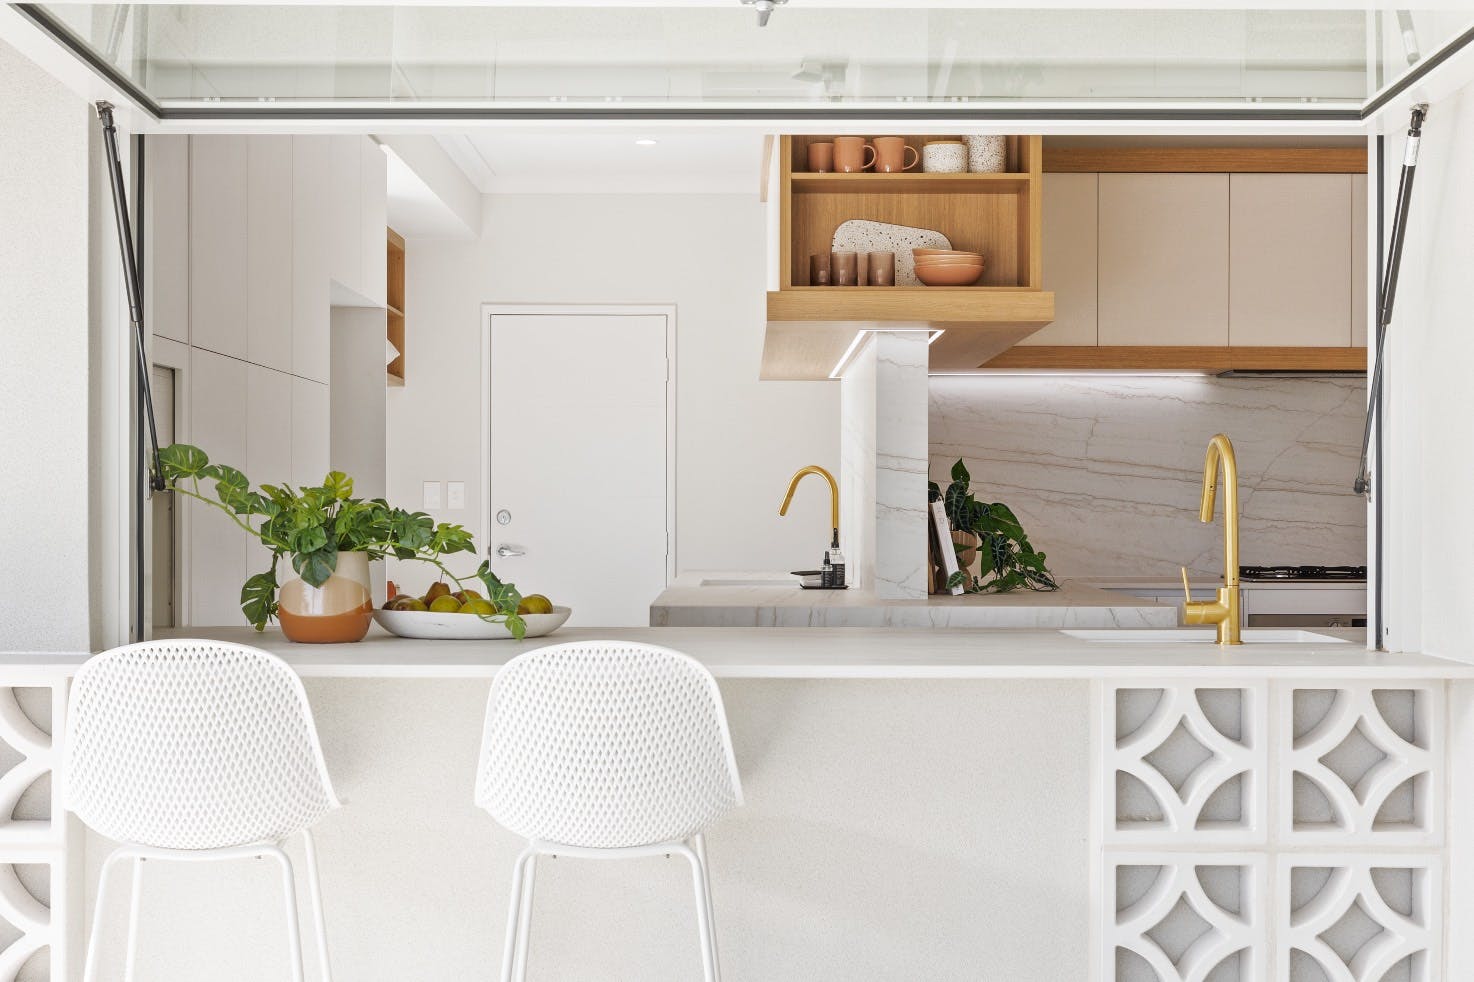 Imagem número 42 da actual secção de Dekton for an integrated façade and outdoor kitchen in this private home in France da Cosentino Portugal